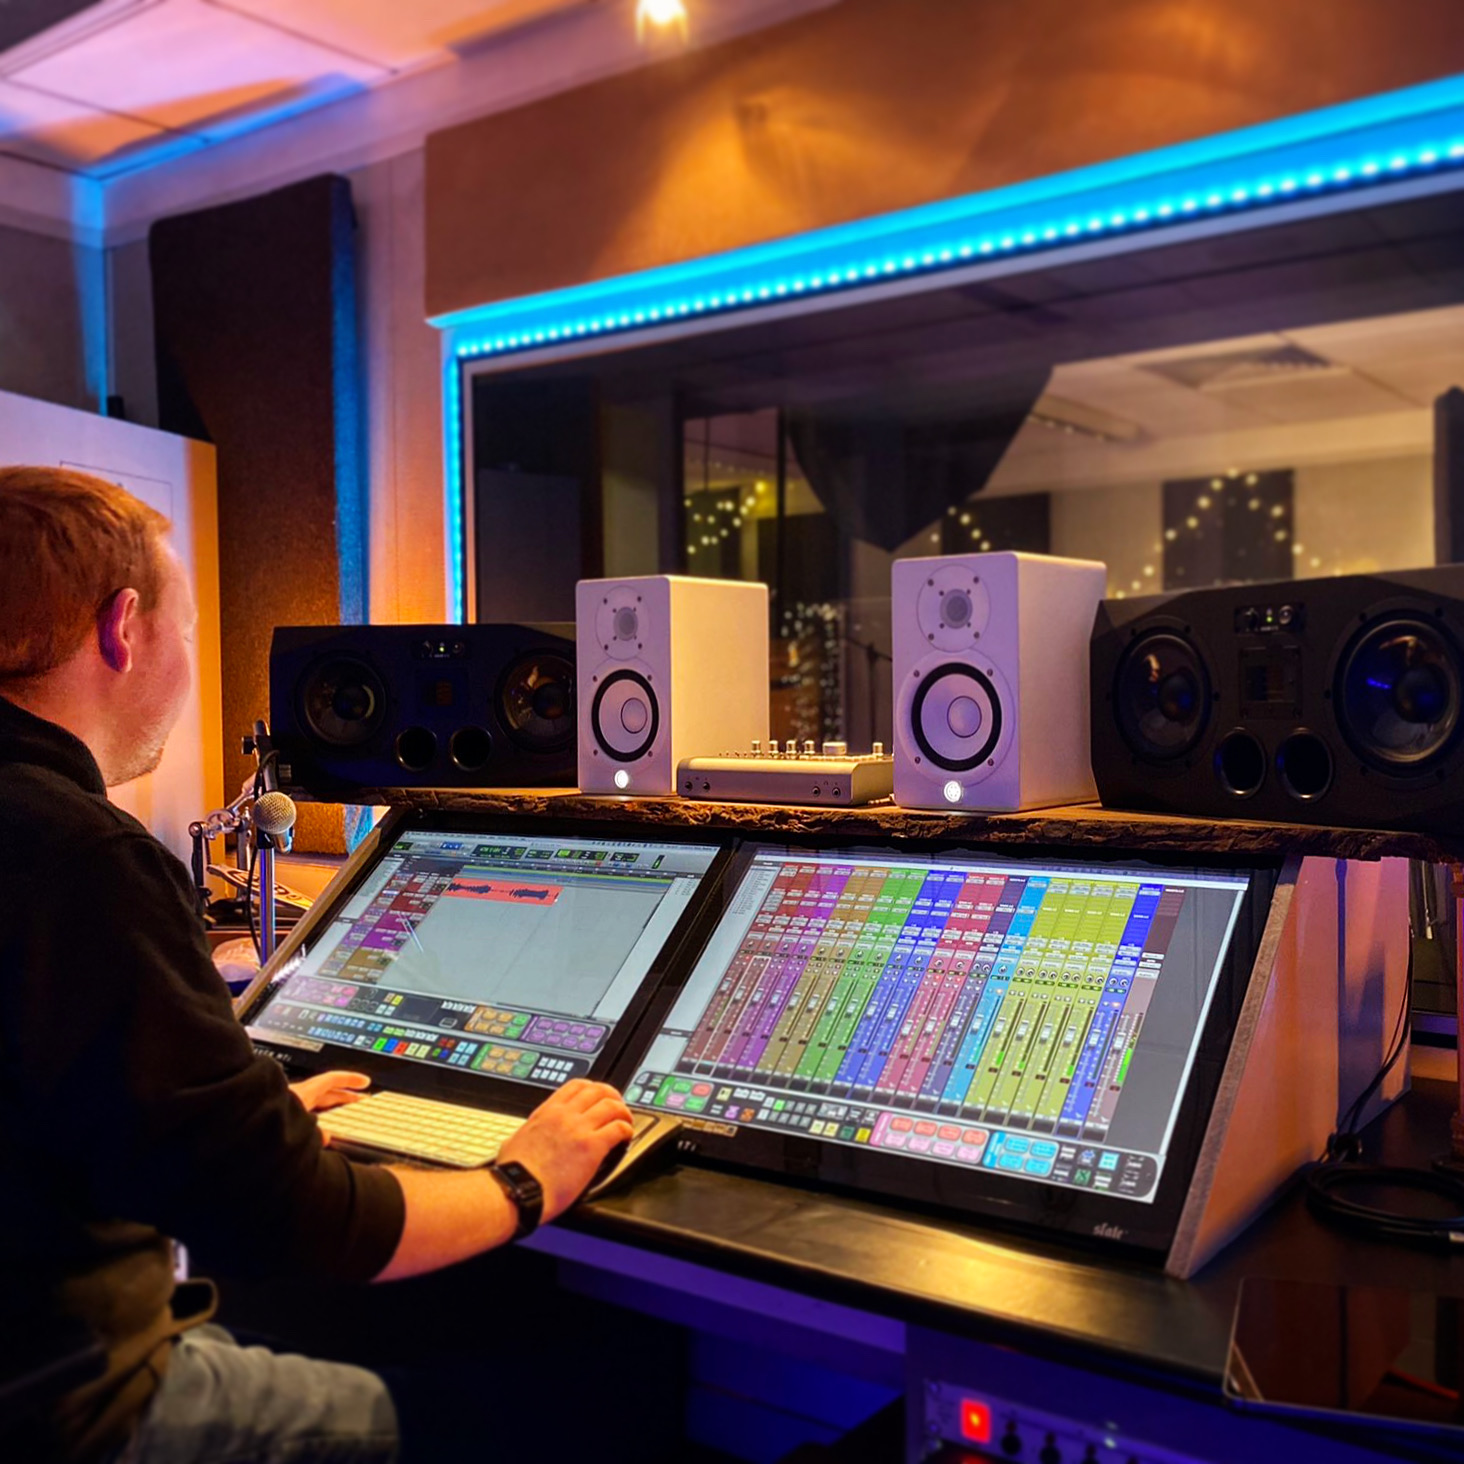 Jordan sitting at mixing desk in recording studio